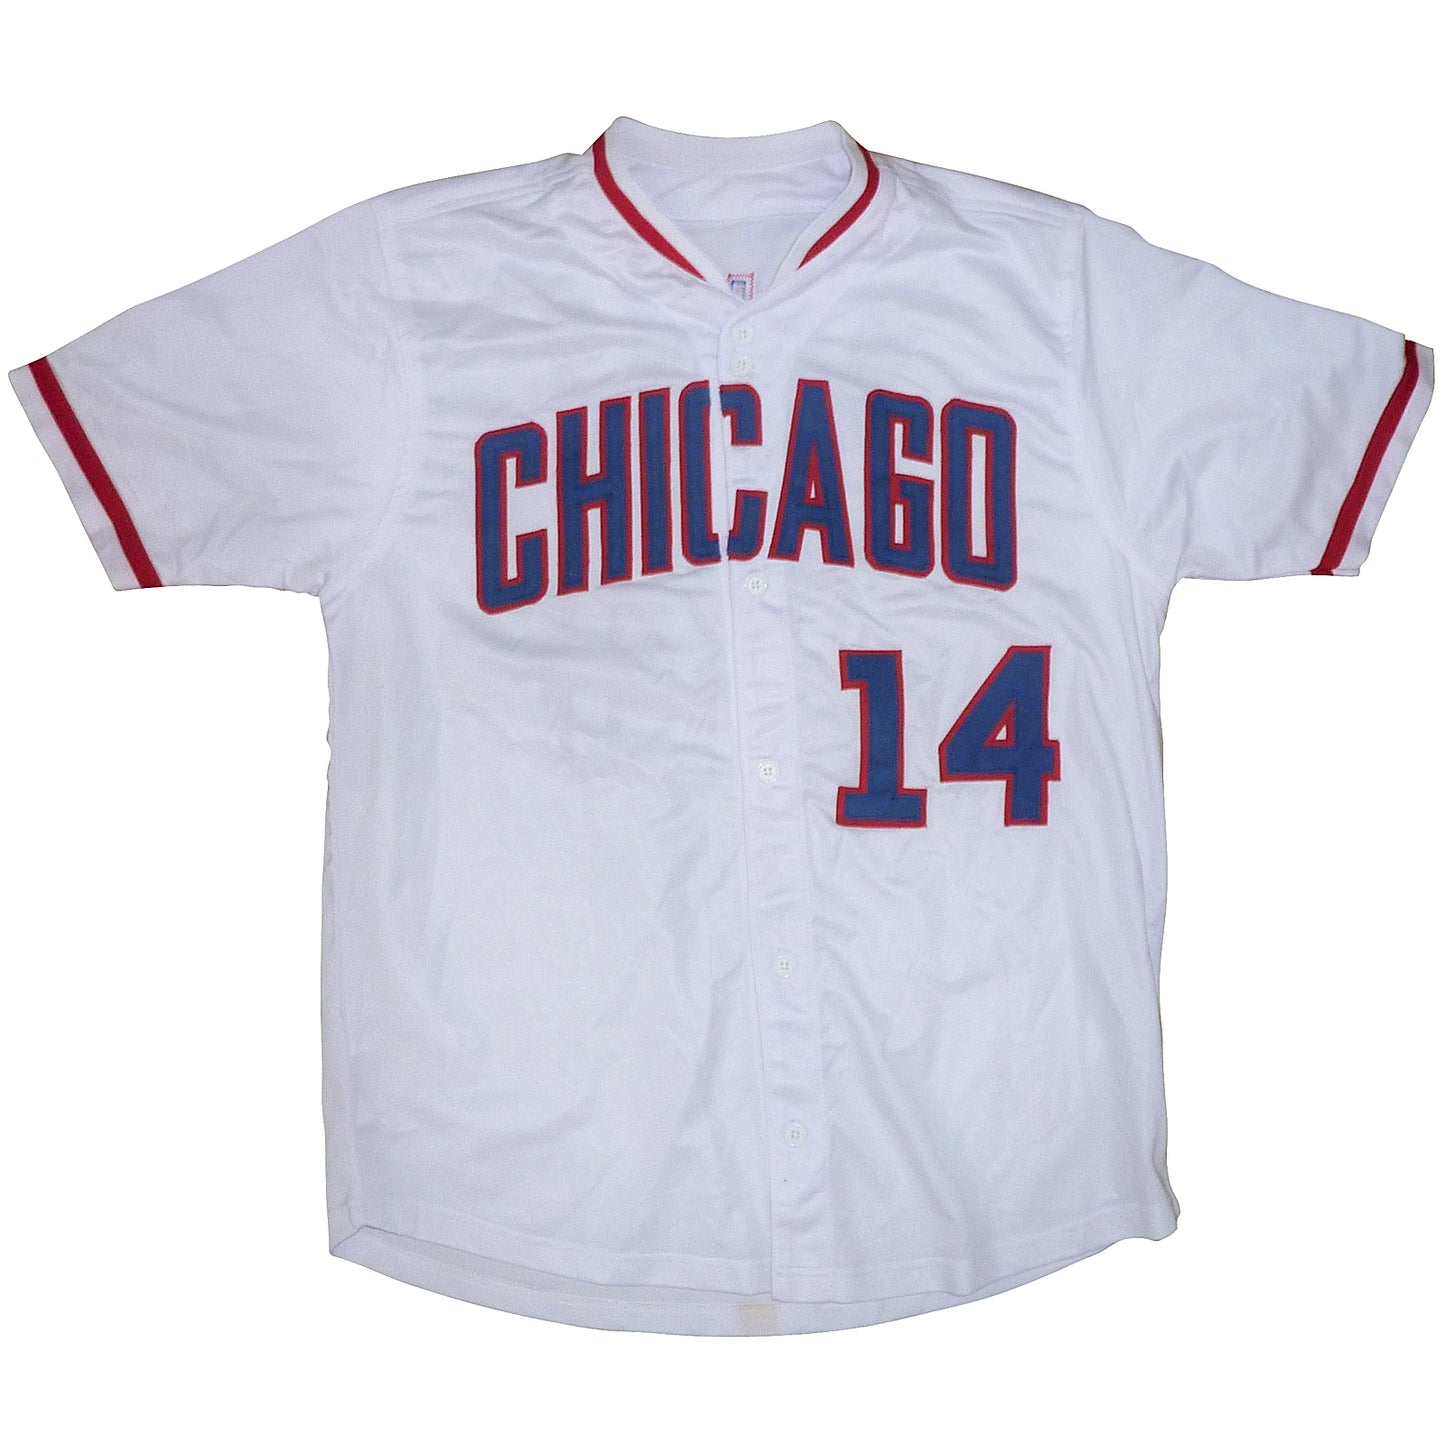 Ernie Banks Signed Chicago Cubs Majestic Baseball Jersey PSA